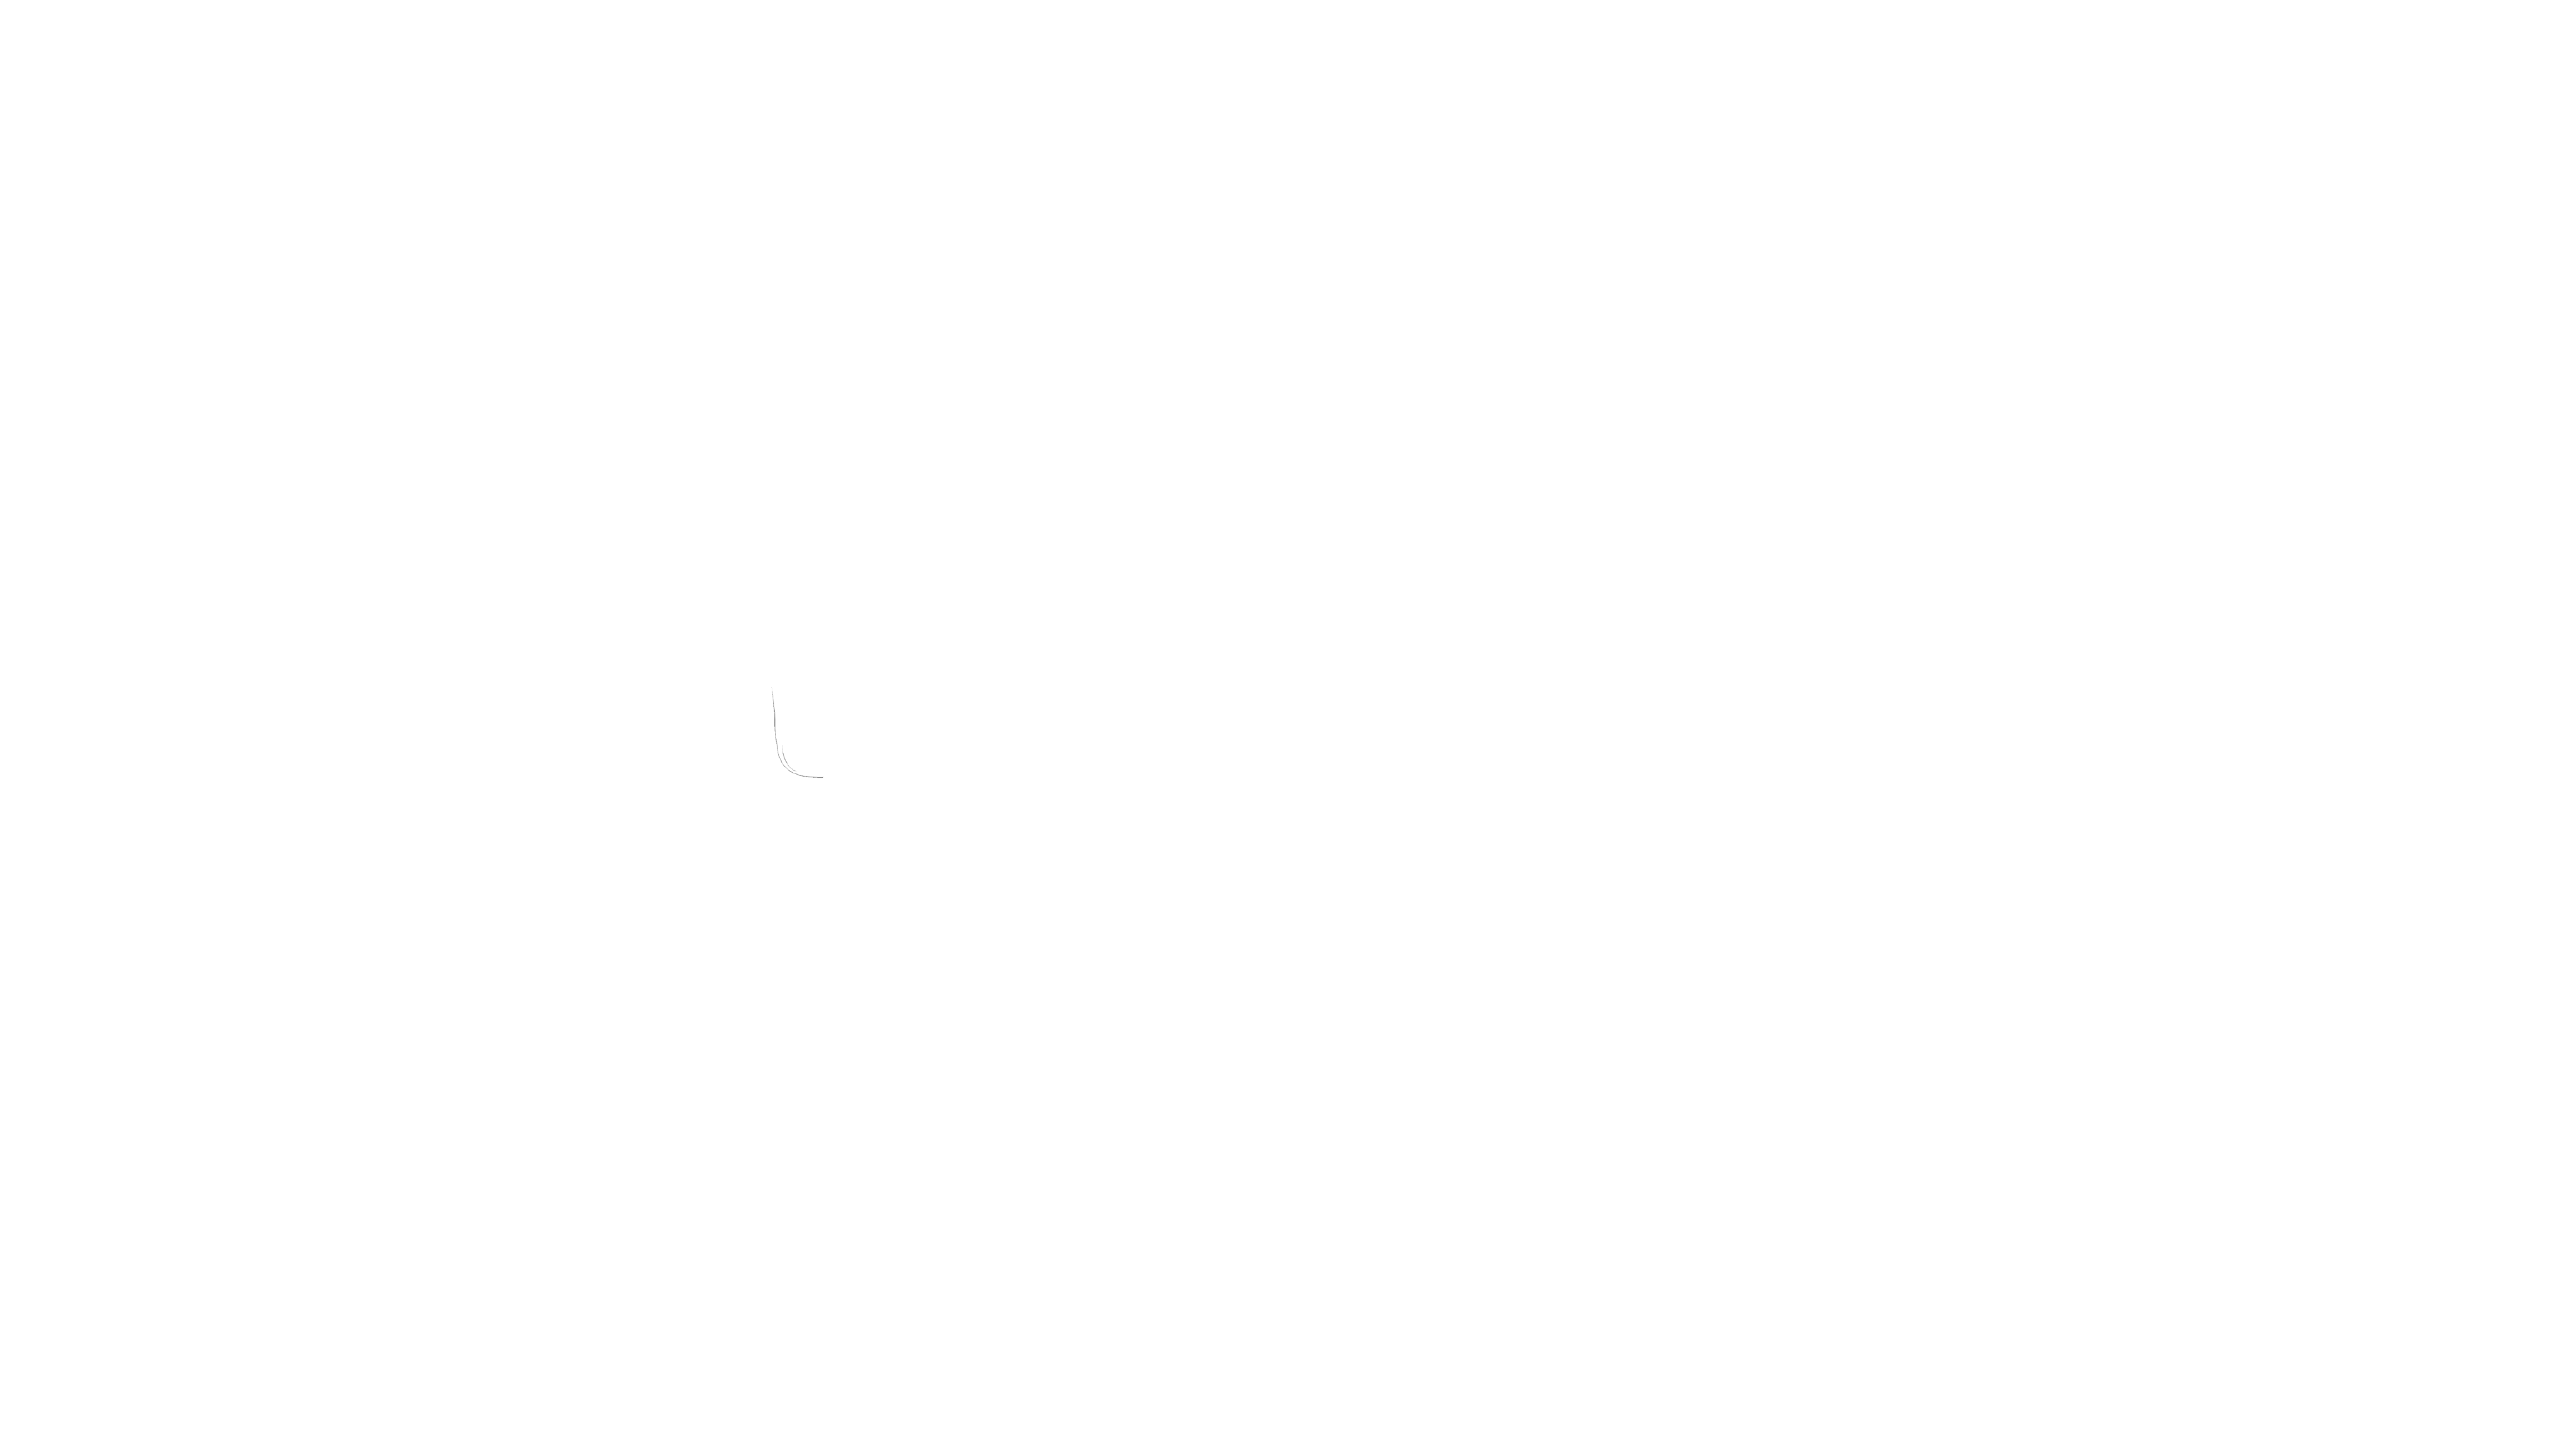 James Suckle